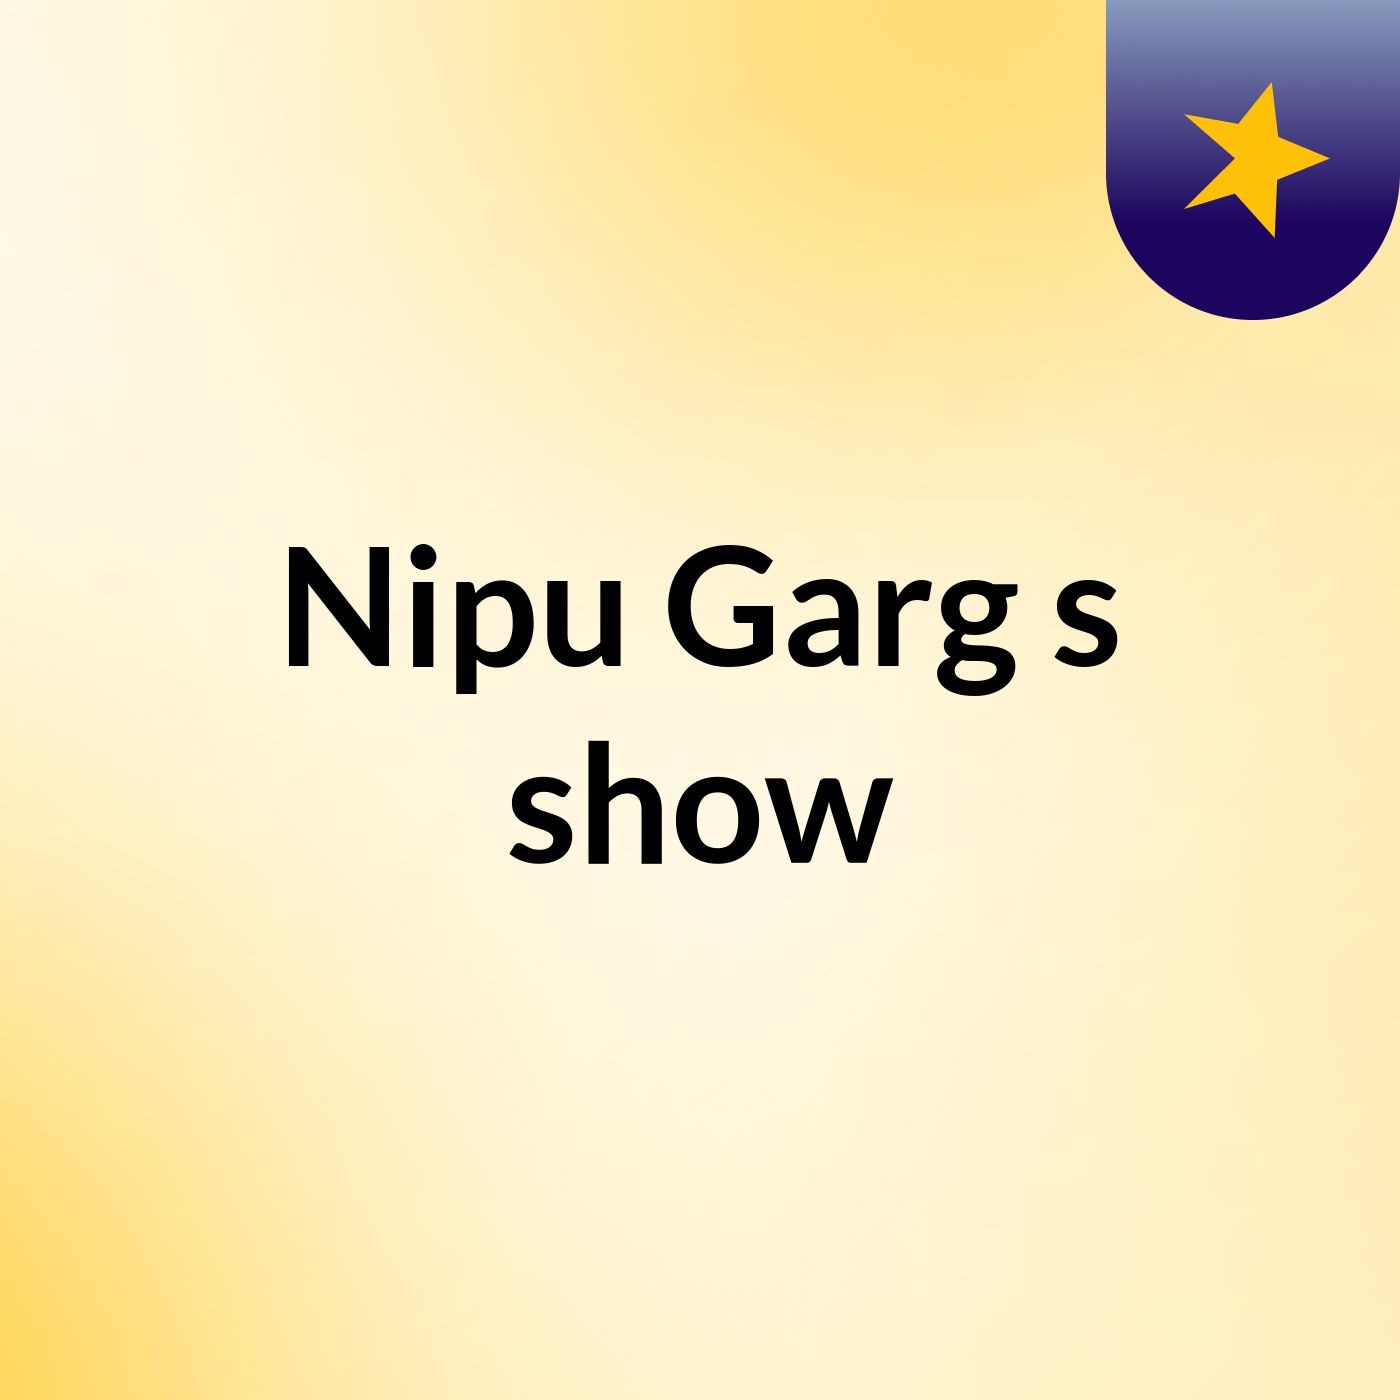 Nipu Garg's show